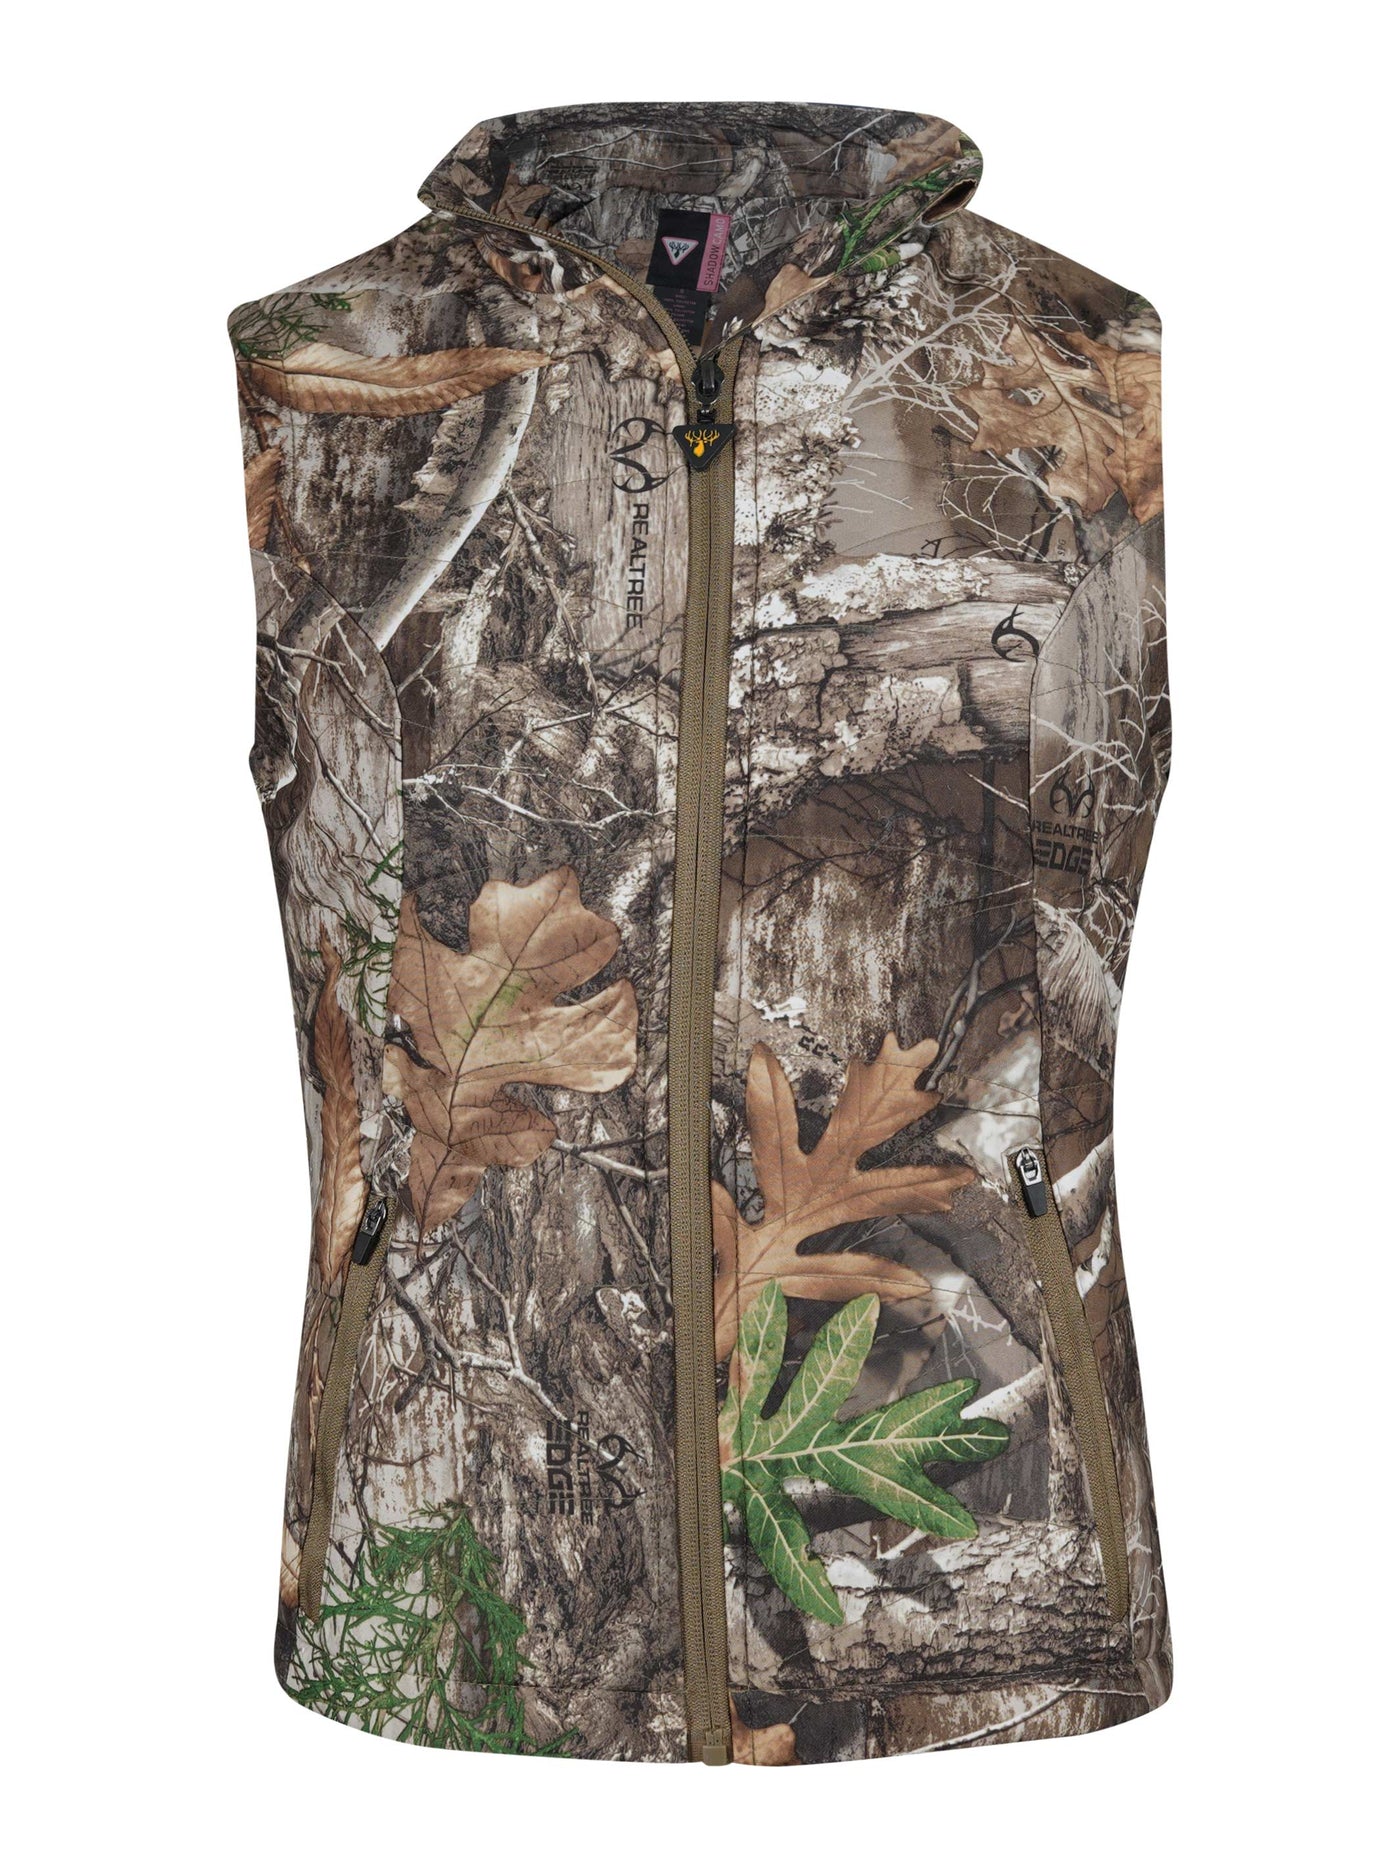 Women's Hunter Loft Vest in Realtree Edge | Corbotras lochi